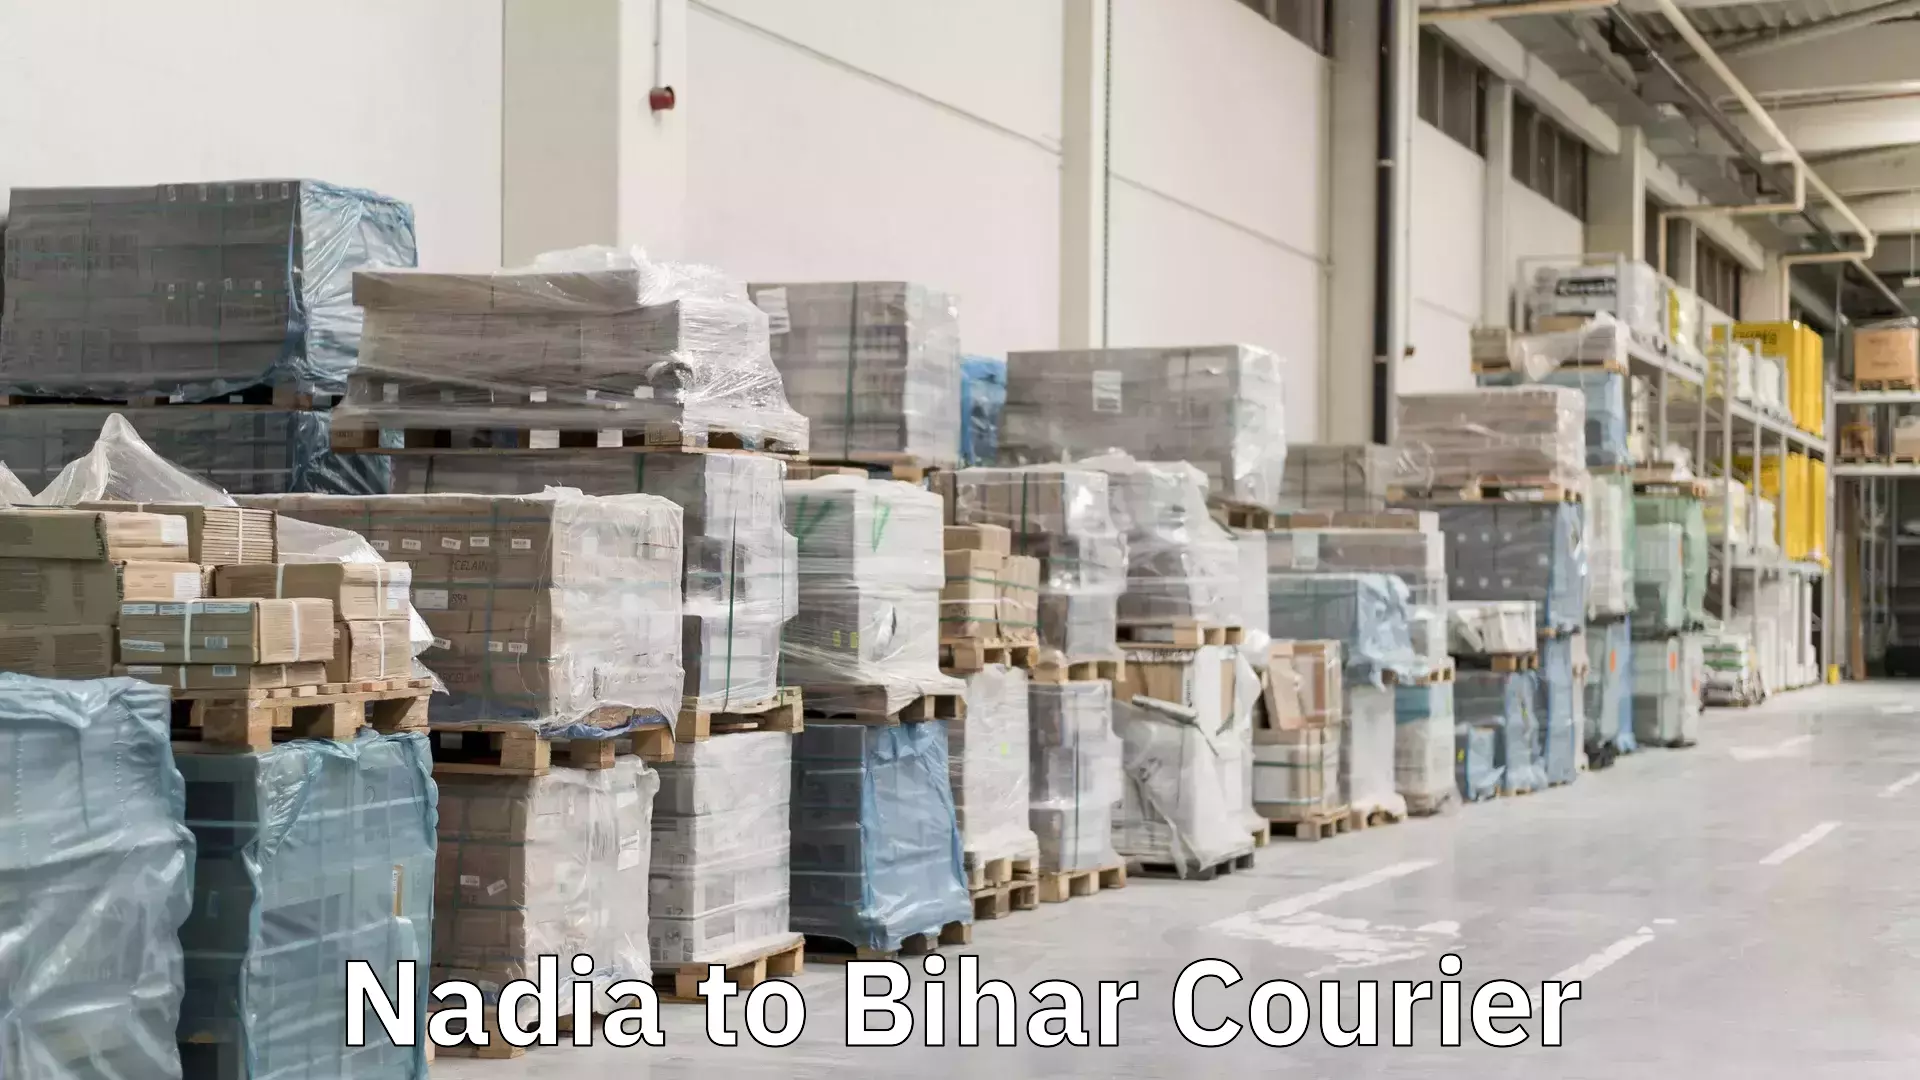 Courier service comparison Nadia to Bihar